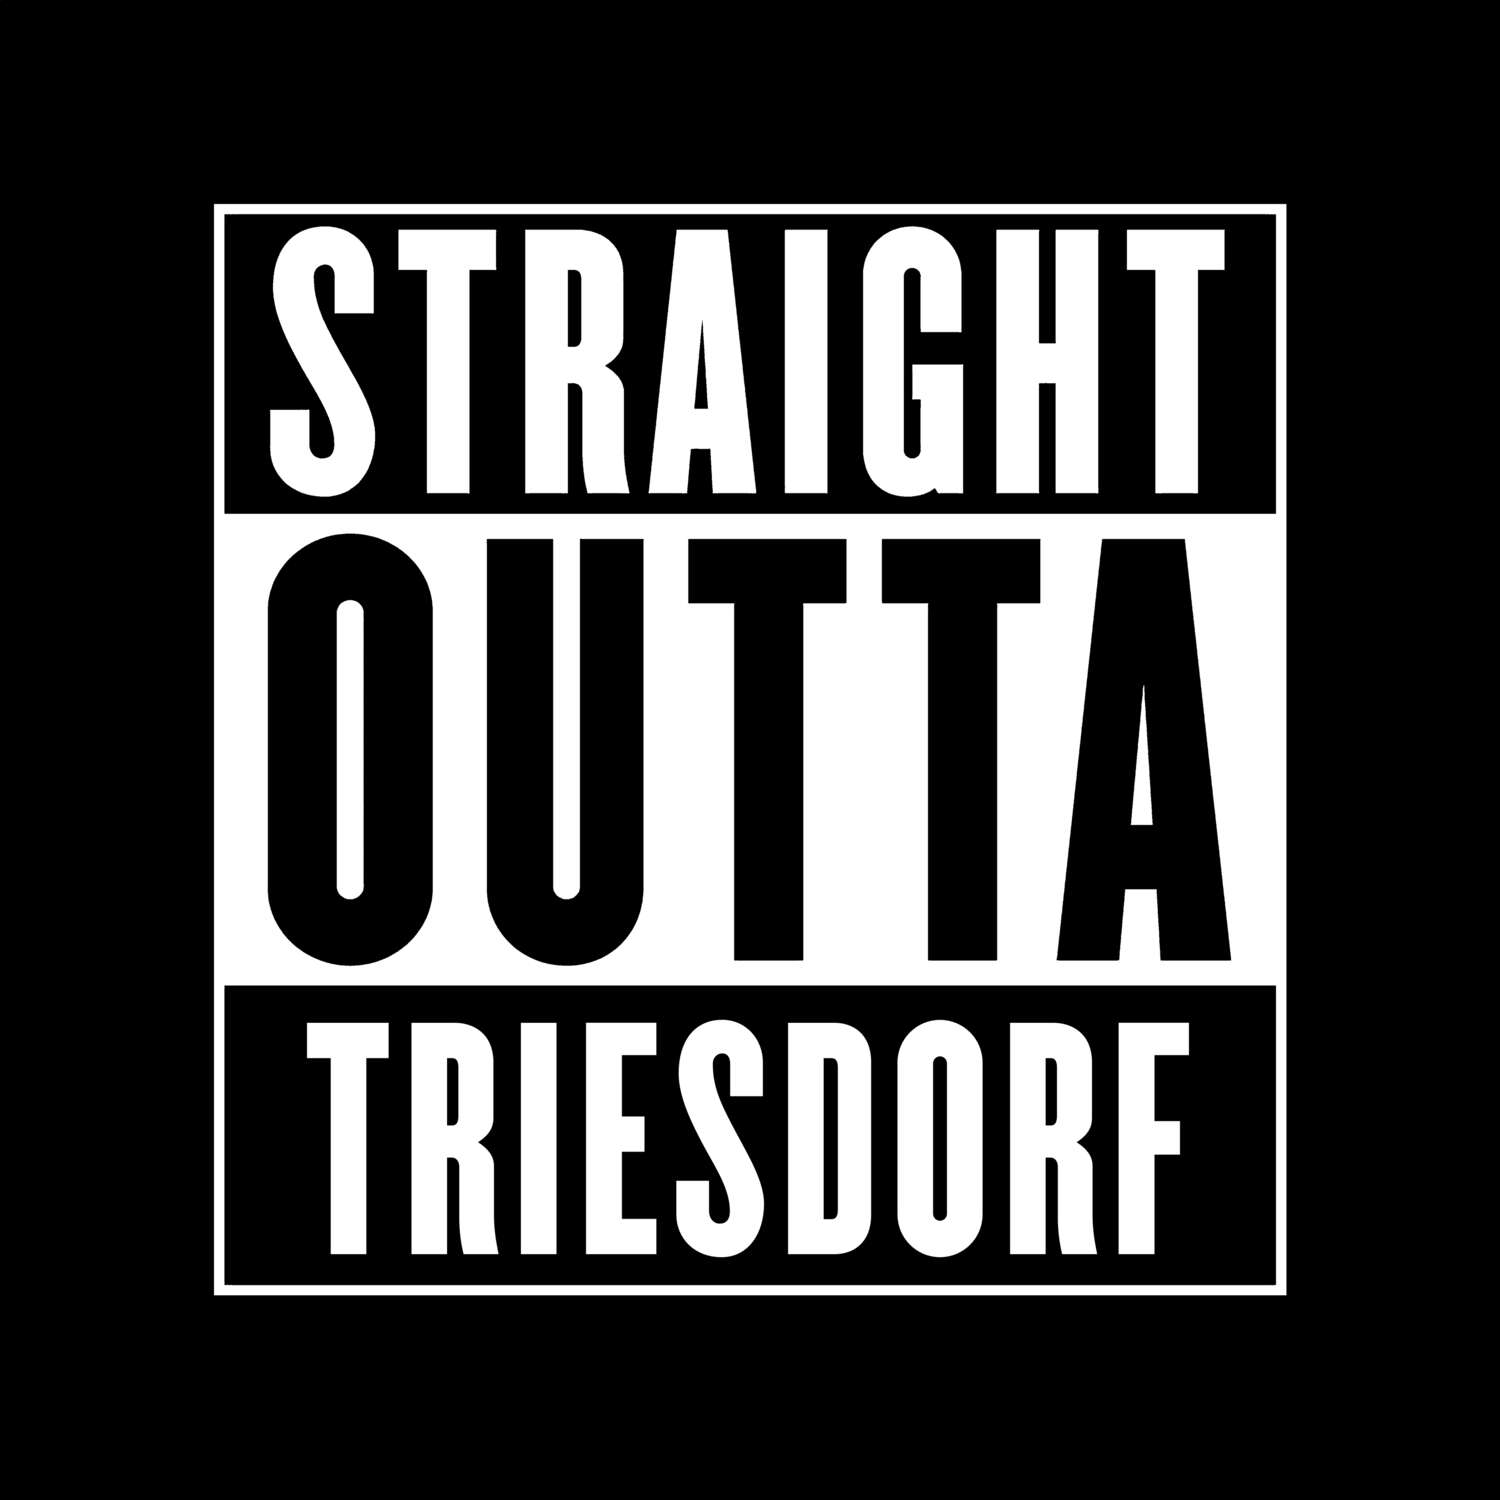 Triesdorf T-Shirt »Straight Outta«